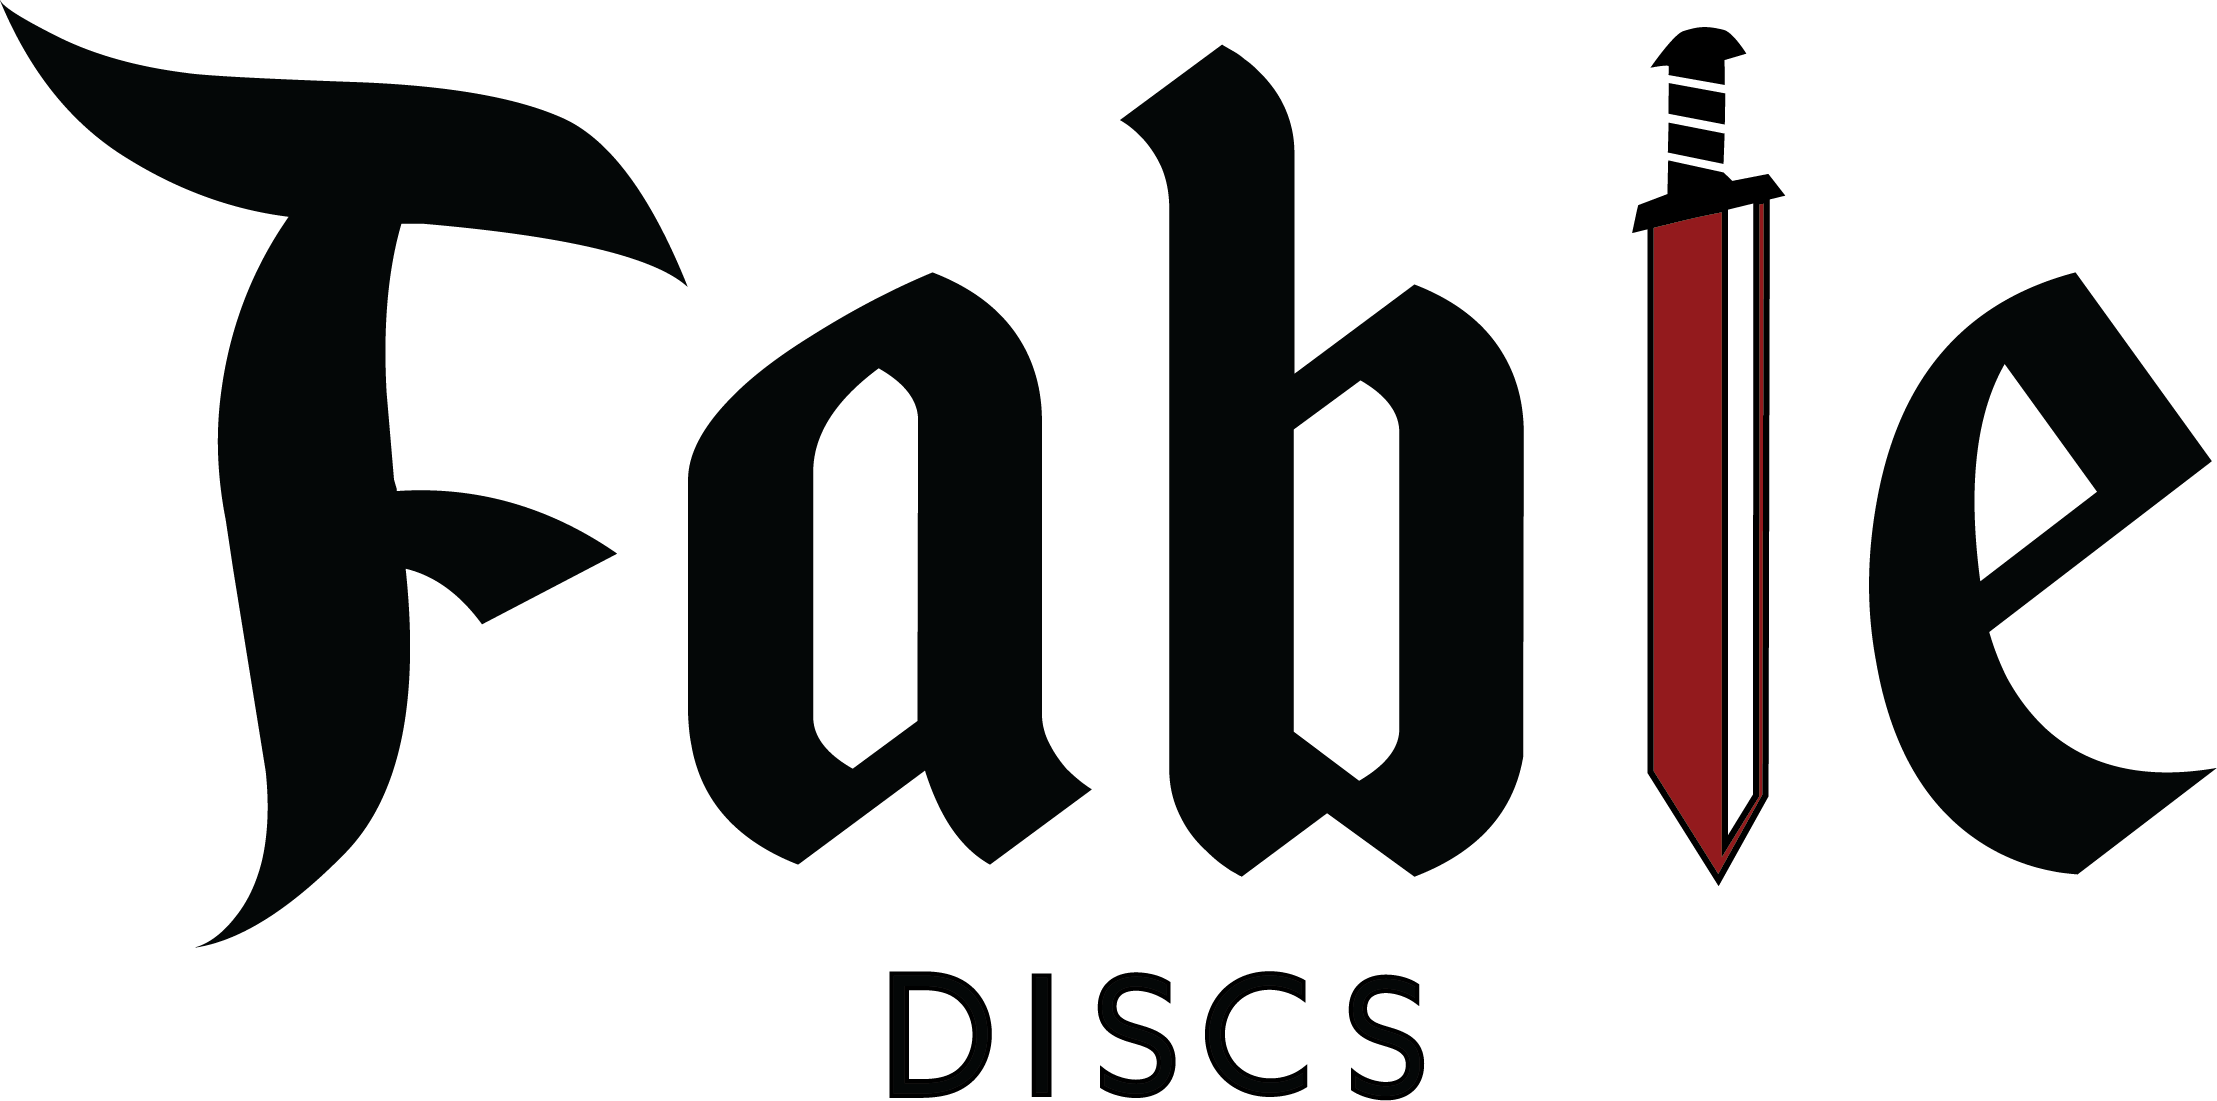 Fable Discs